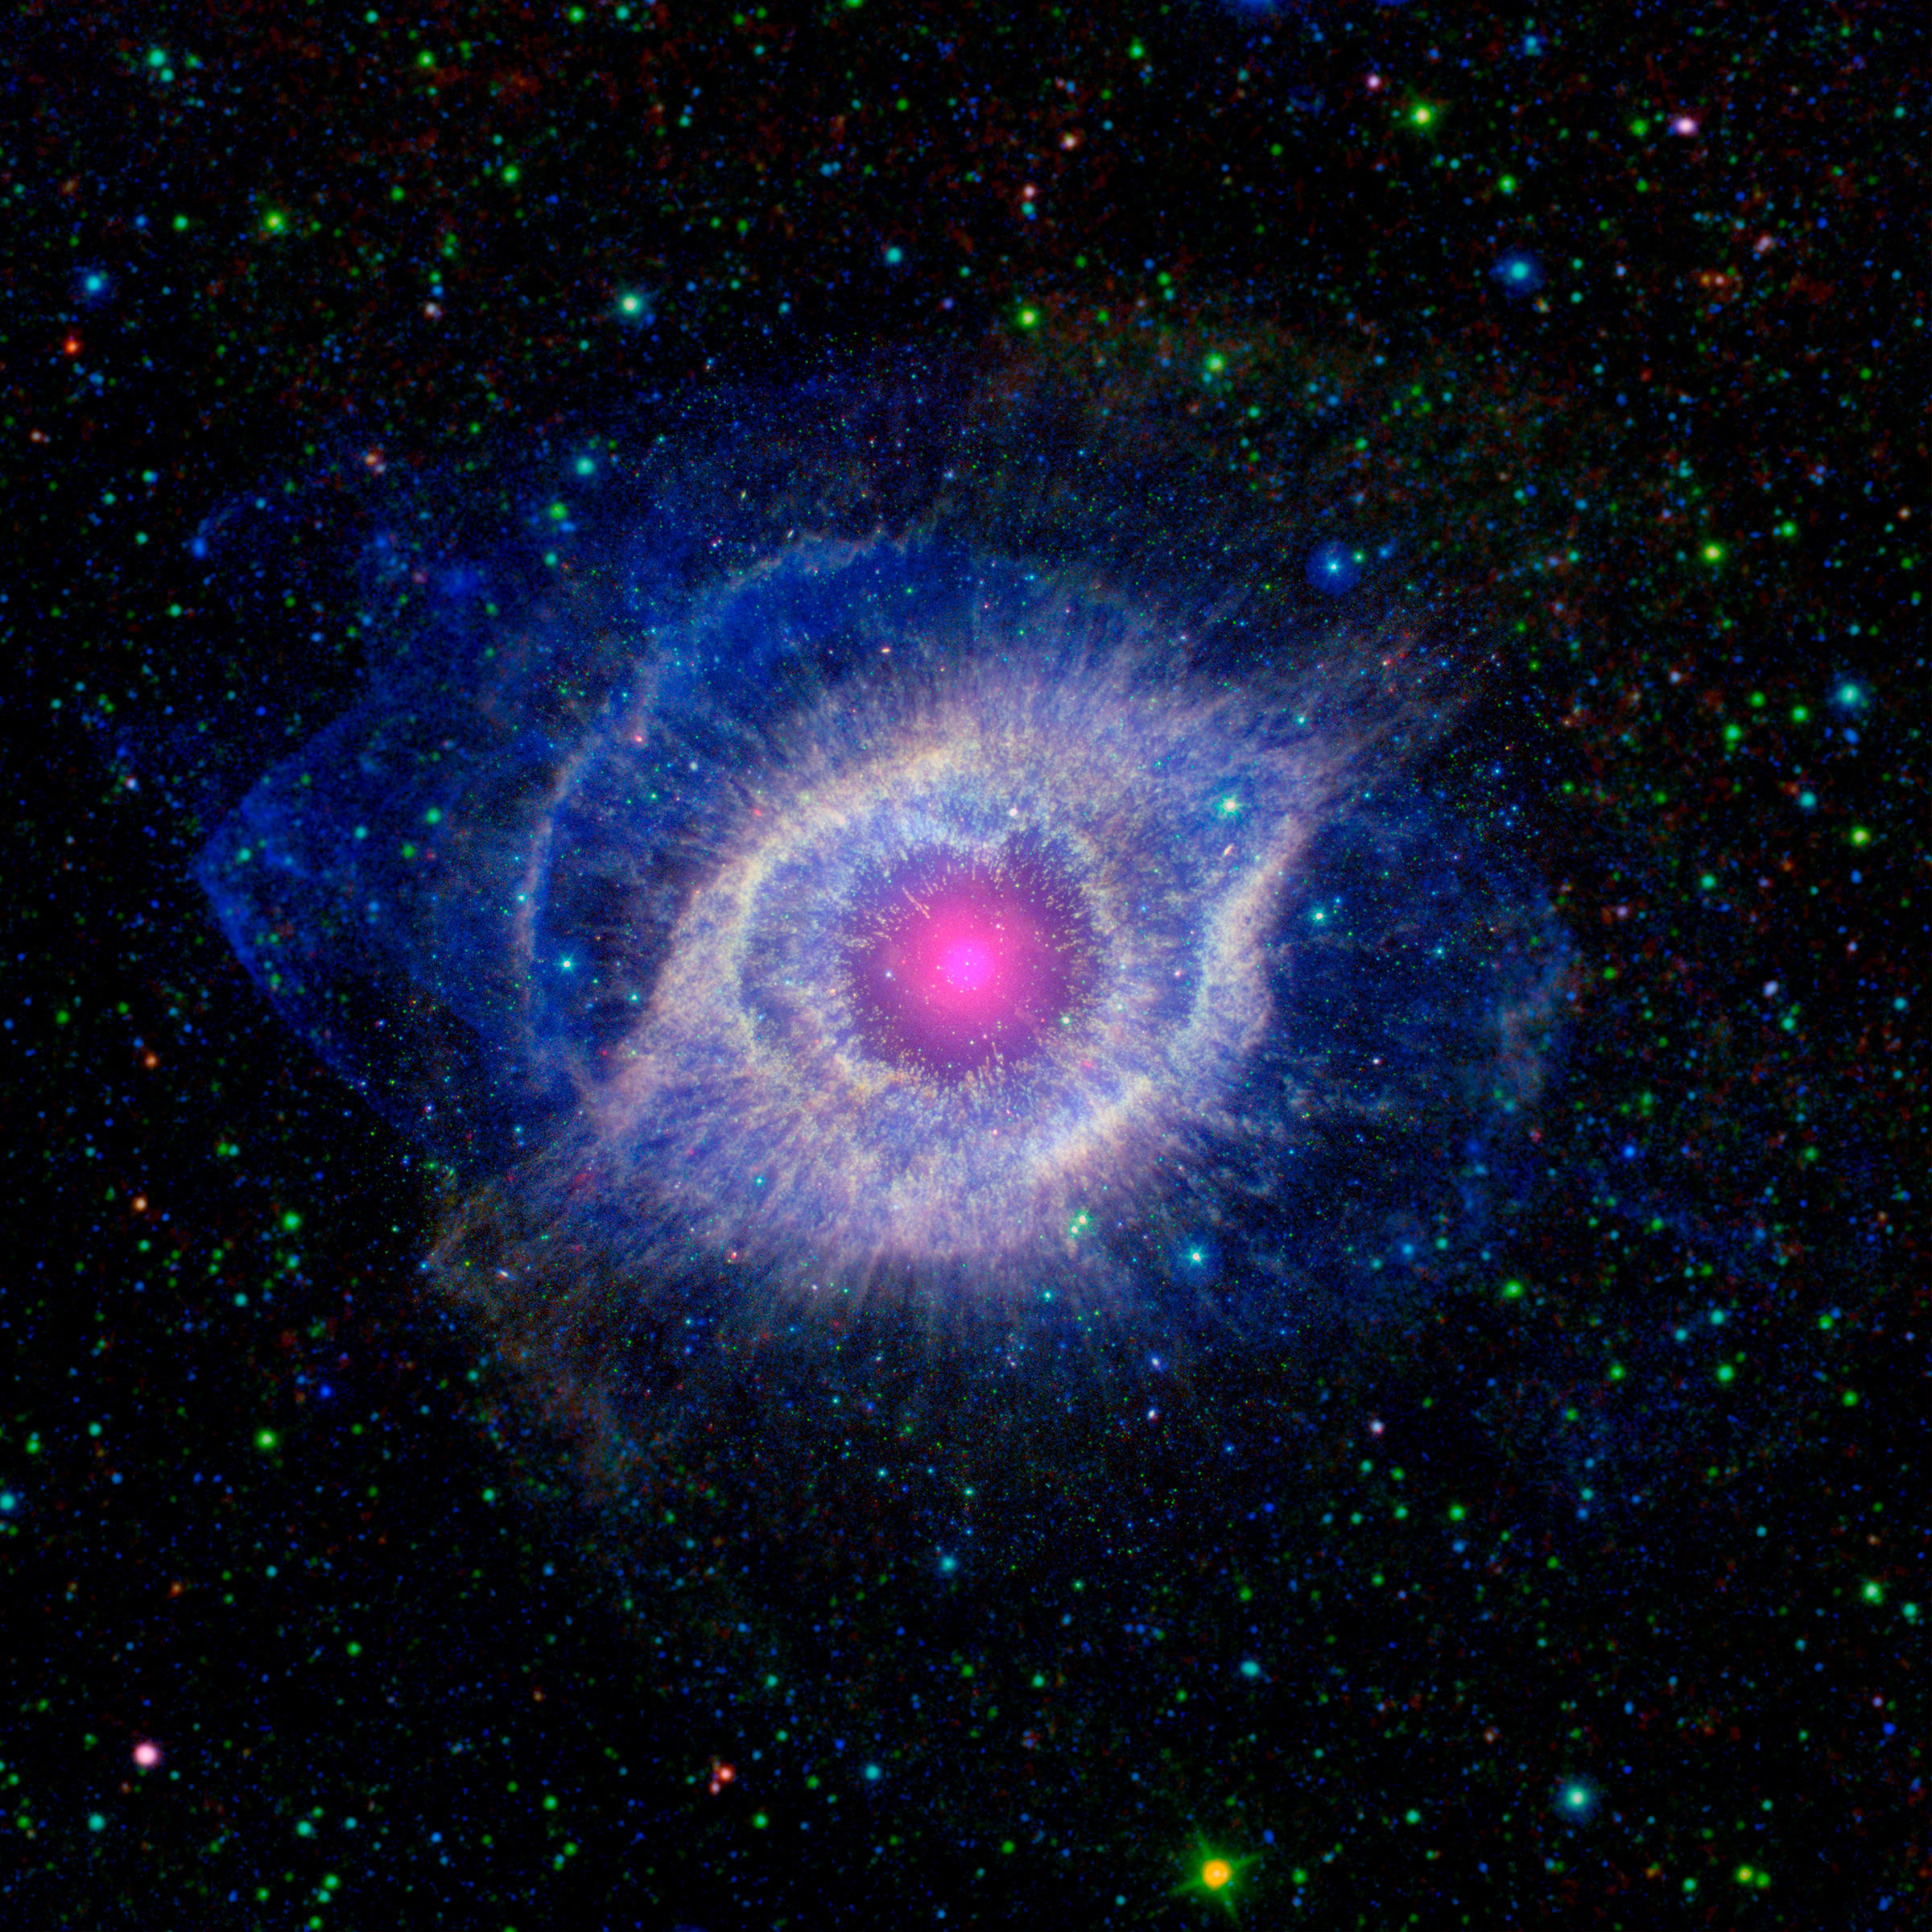 Фото:NASA / JPL-Caltech